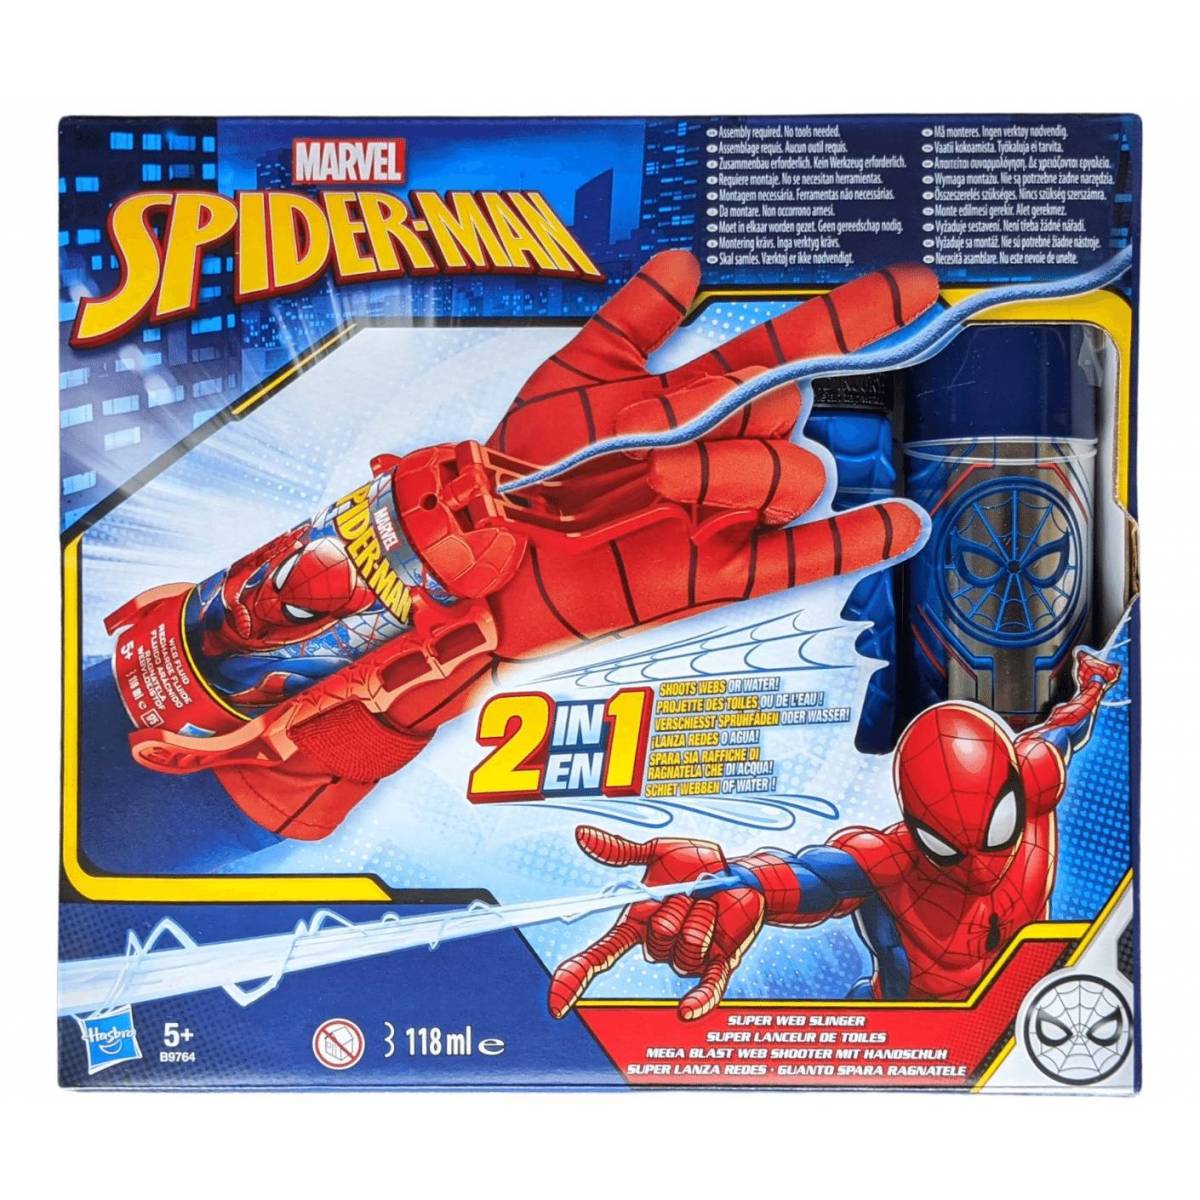 SPIDERMAN - Spiderman Lance Projectile 2 En 1 - Dès 5 ans - Super U, Hyper  U, U Express 